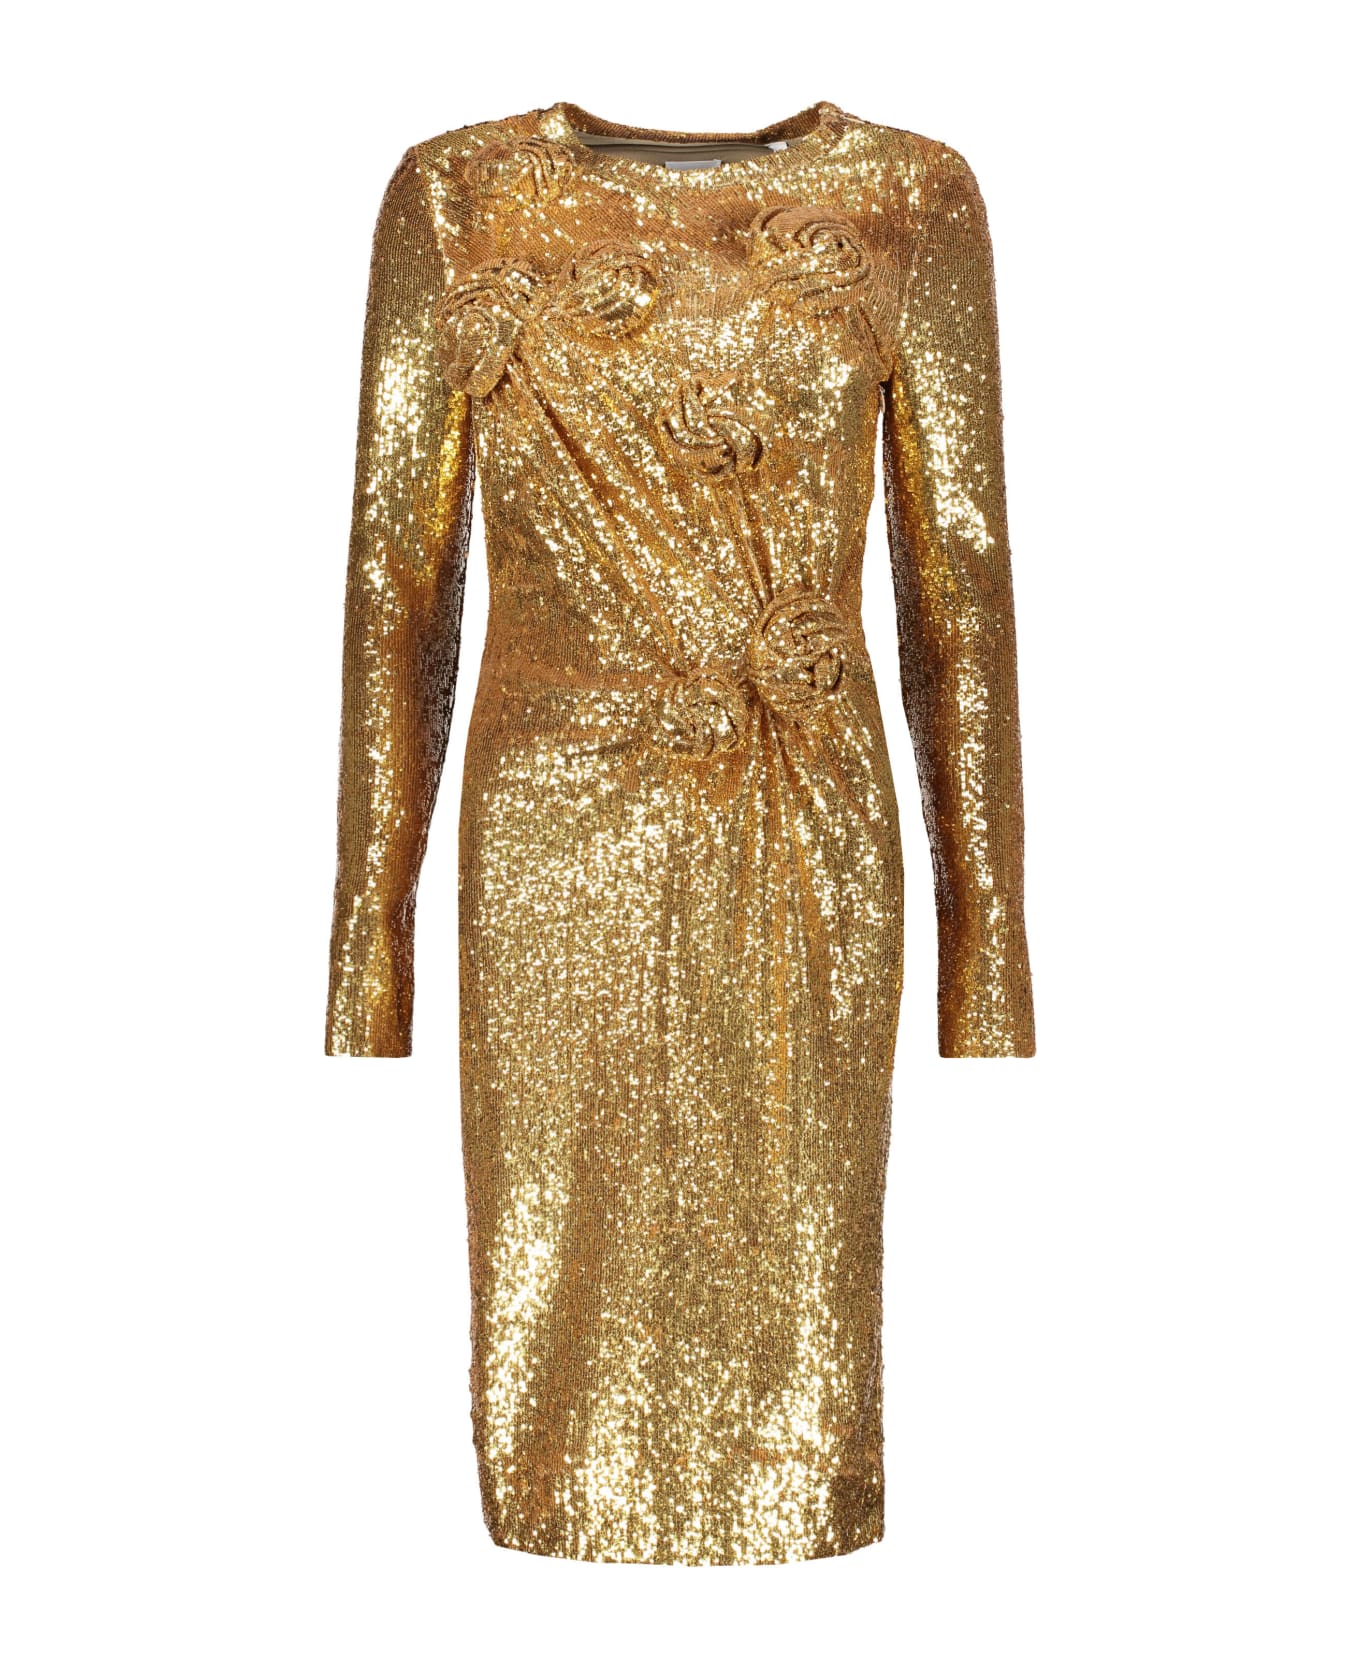 Burberry Rhinestone Dress - Gold